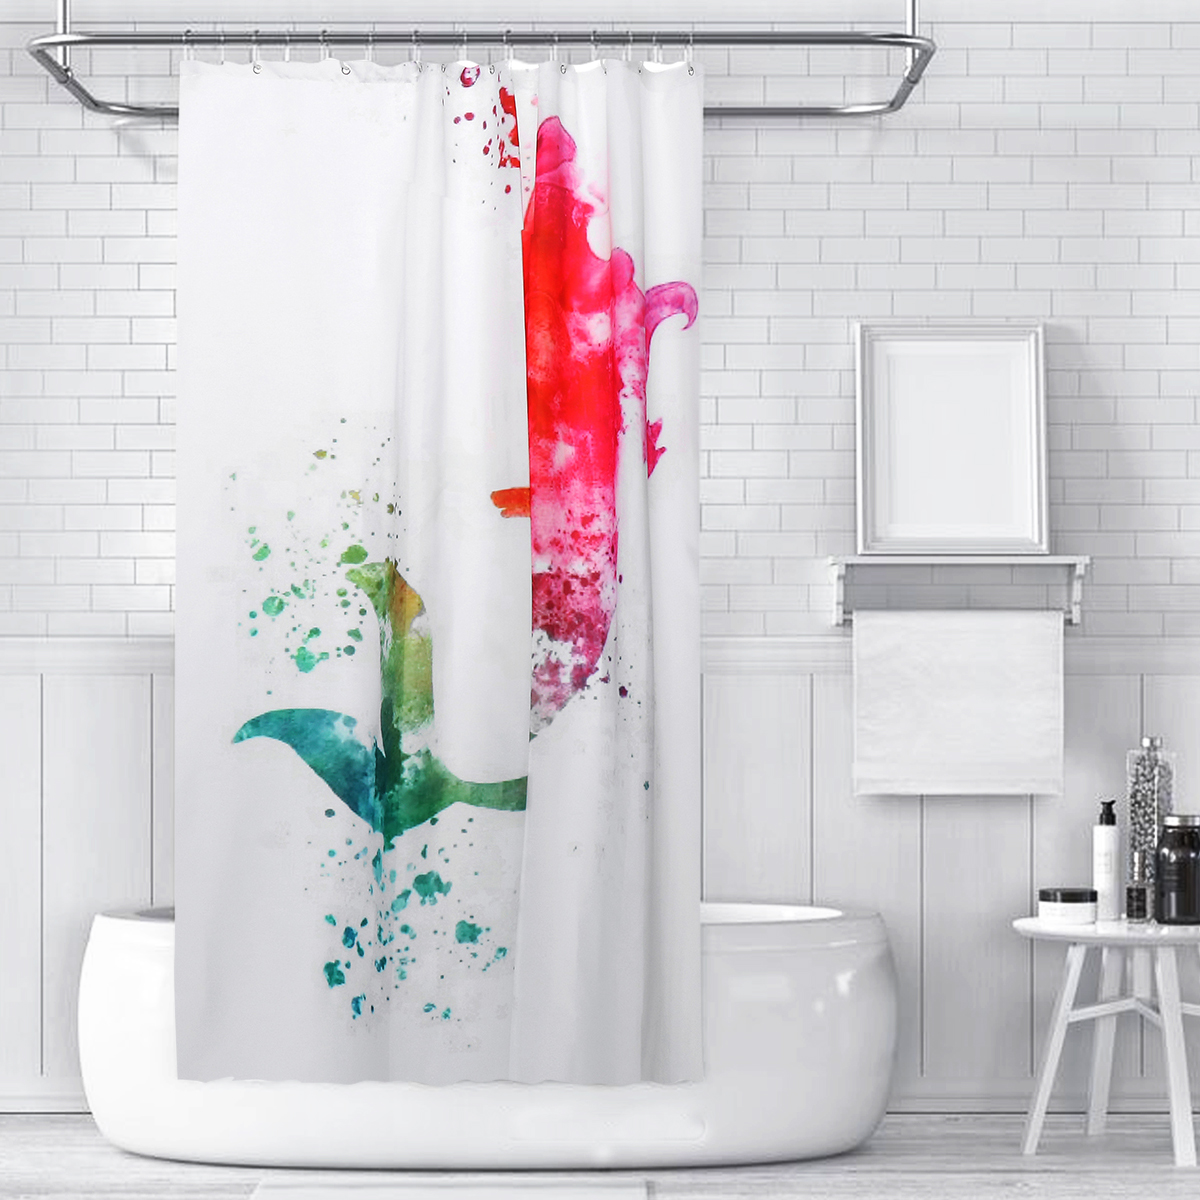 180x180CM--709quotx709quot-3D-Bathroom-Waterproof-Shower-Curtain-Mermaid-Pattern-With-12-Plastic-Hoo-1425089